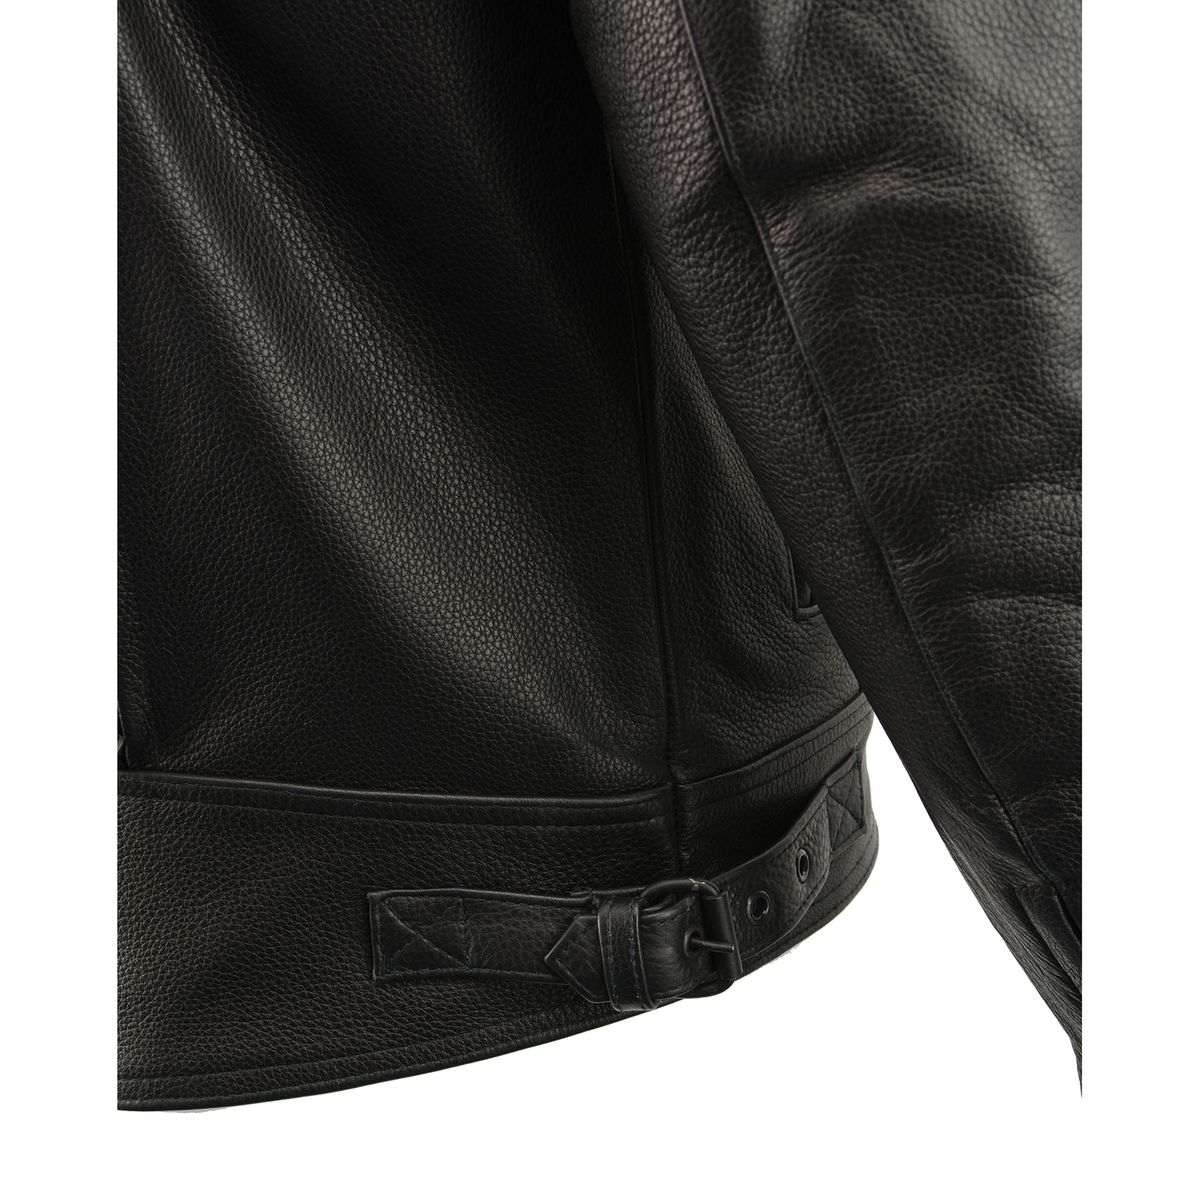 Men's Pistol Pete Vented Black Leather Cruiser Jacket